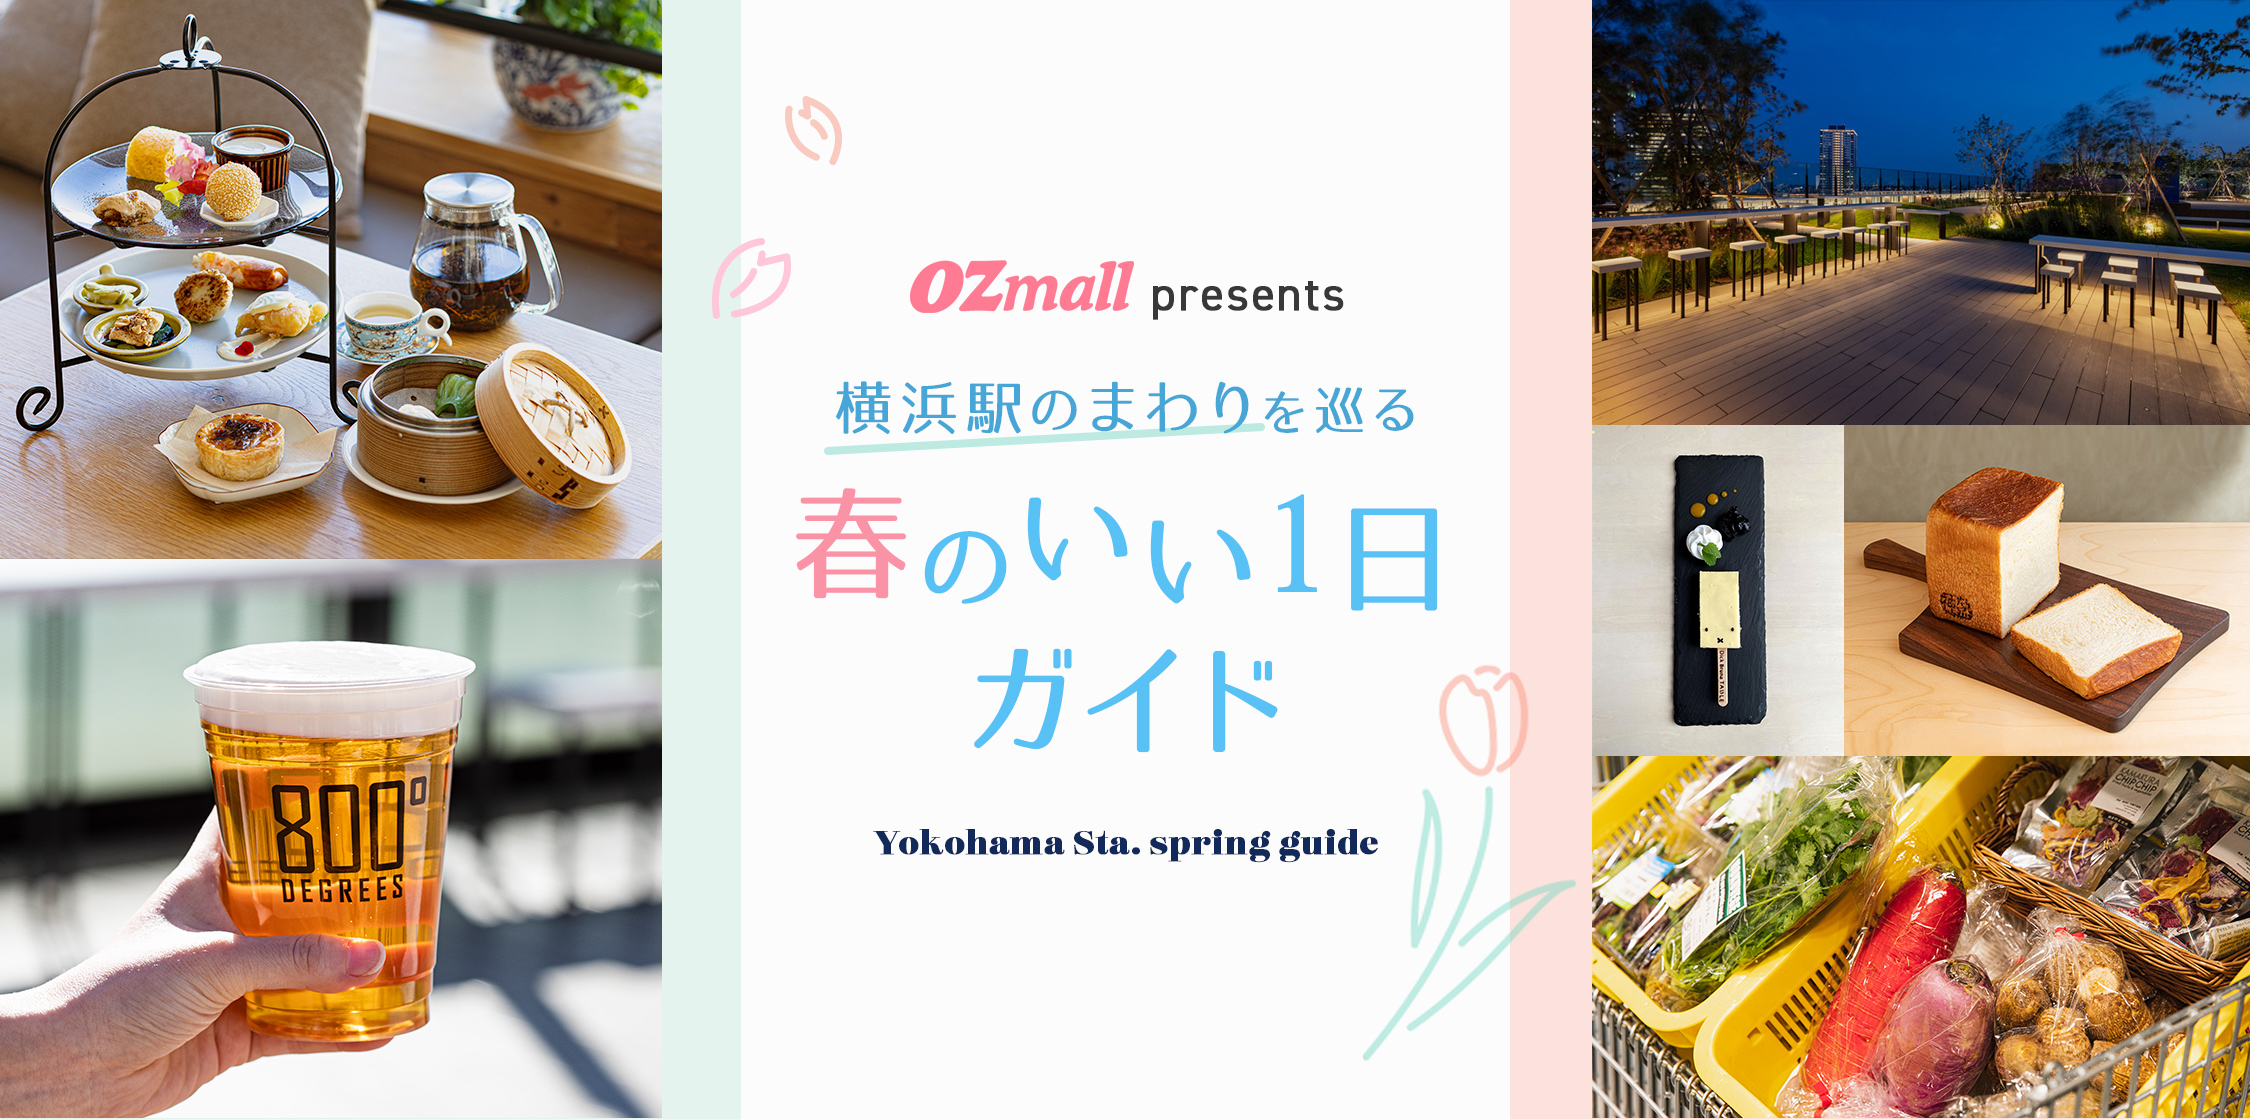 OZmall presents 横浜駅のまわりを巡る春のいい1日ガイド